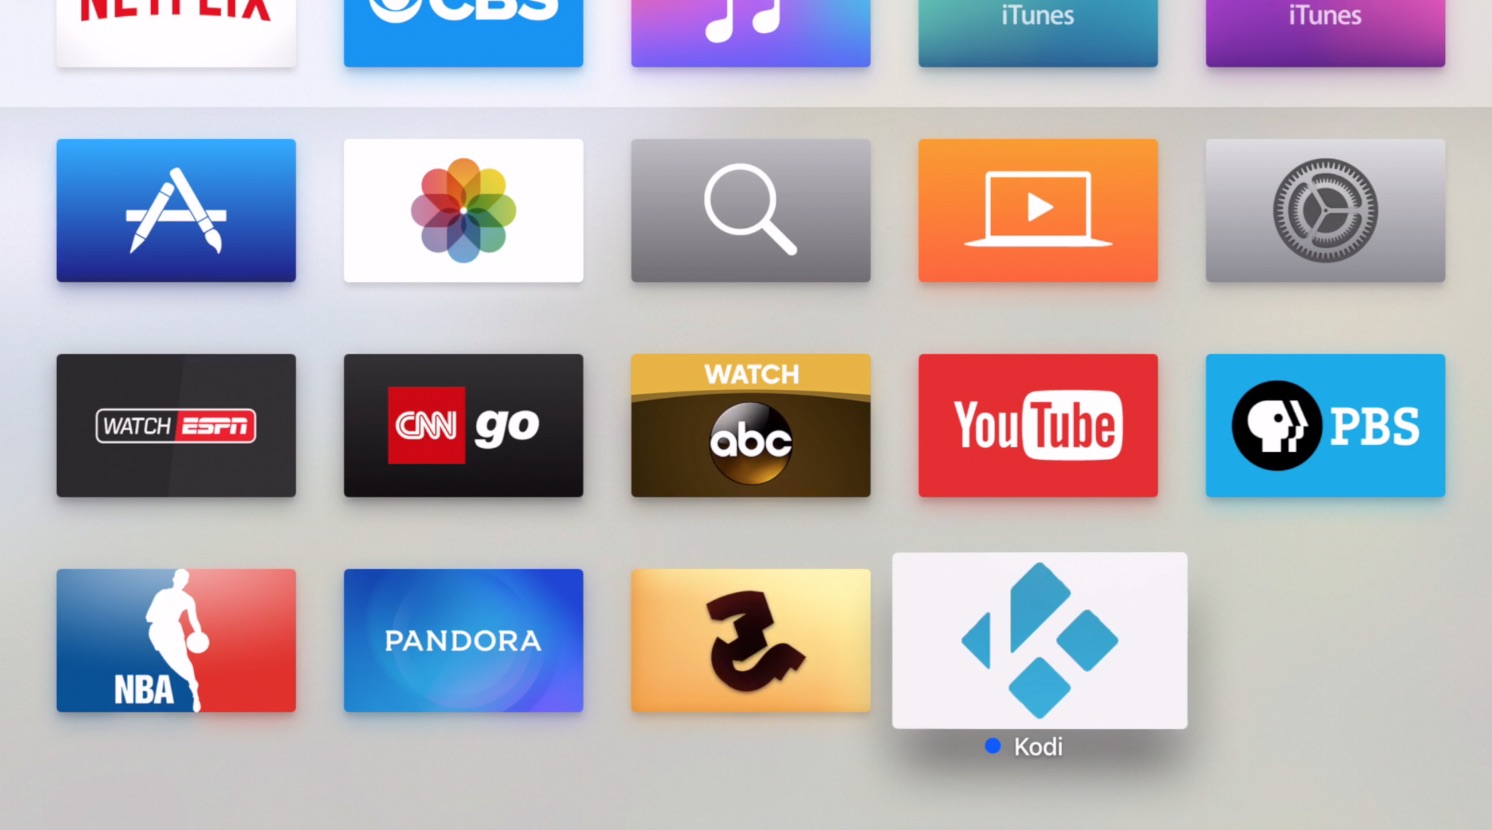 How To Download Kodi On Apple TV 4